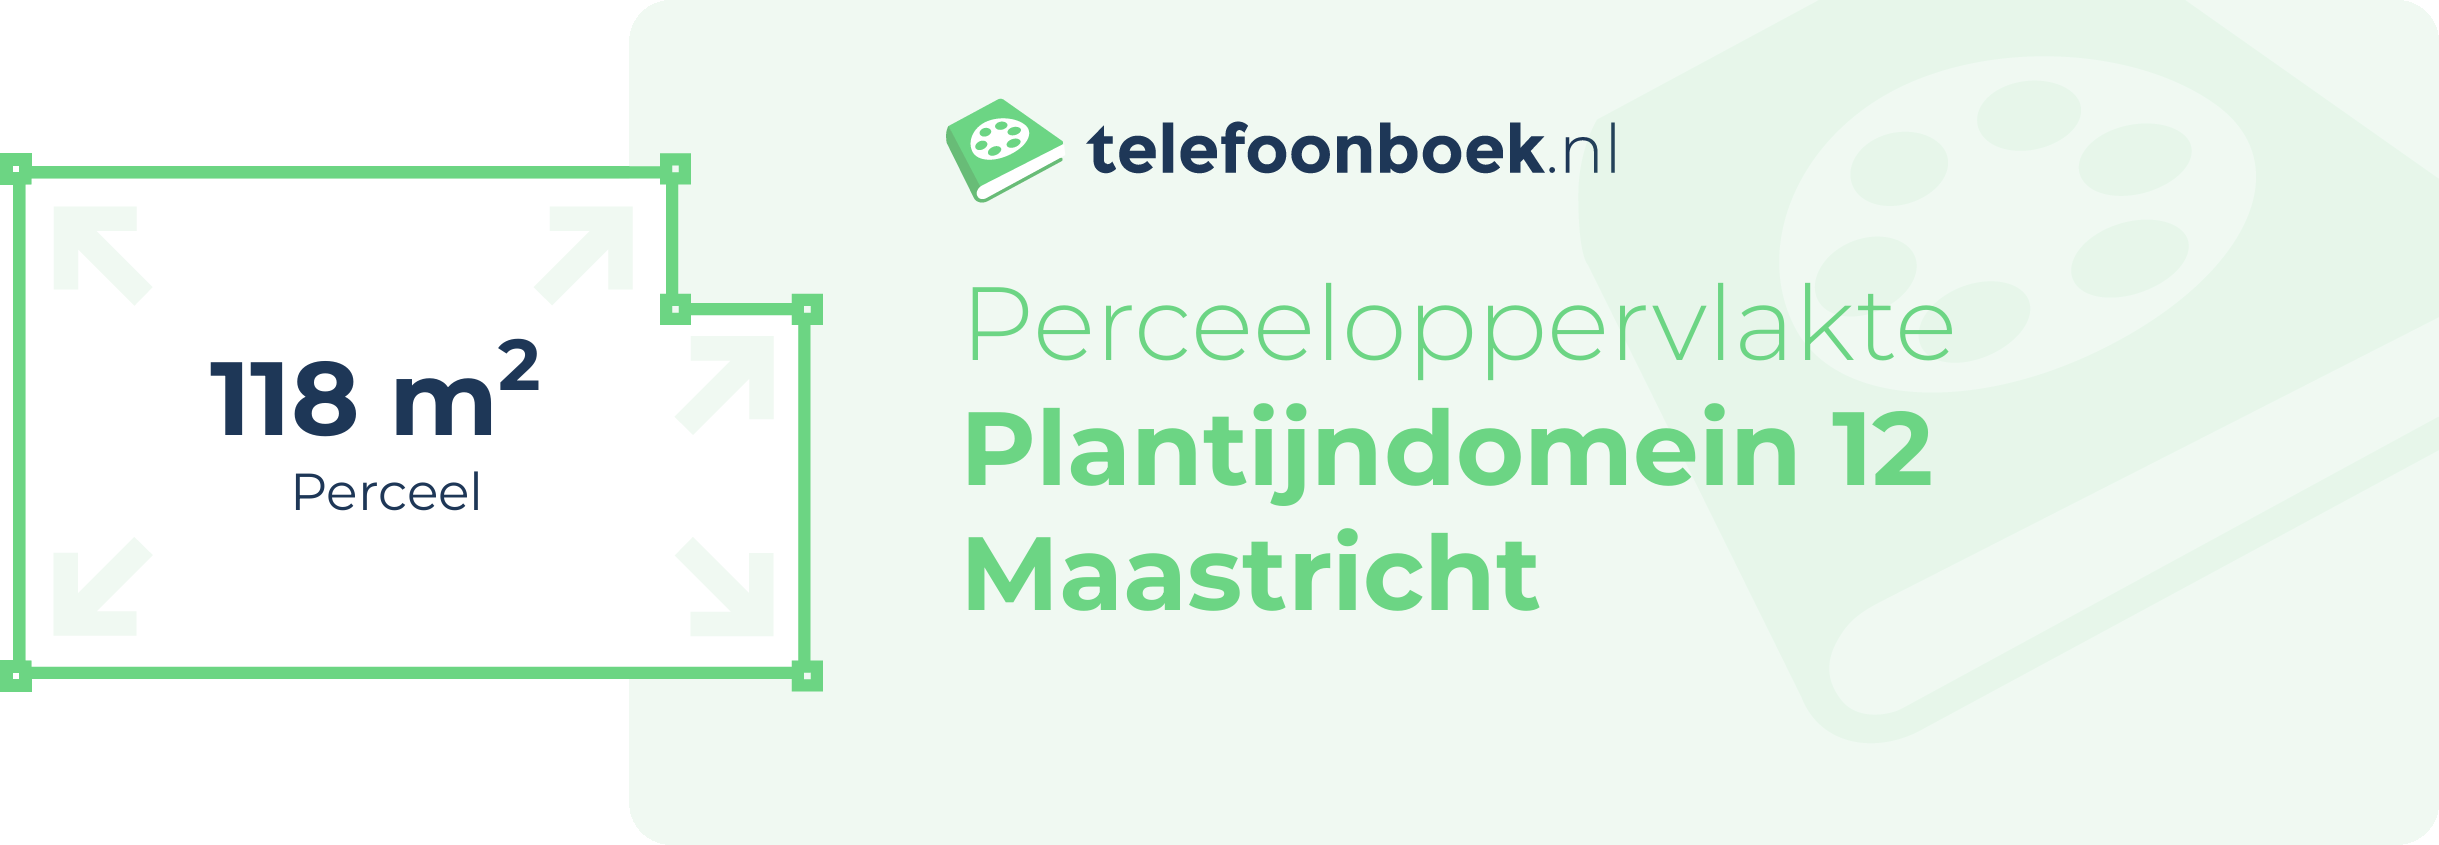 Perceeloppervlakte Plantijndomein 12 Maastricht